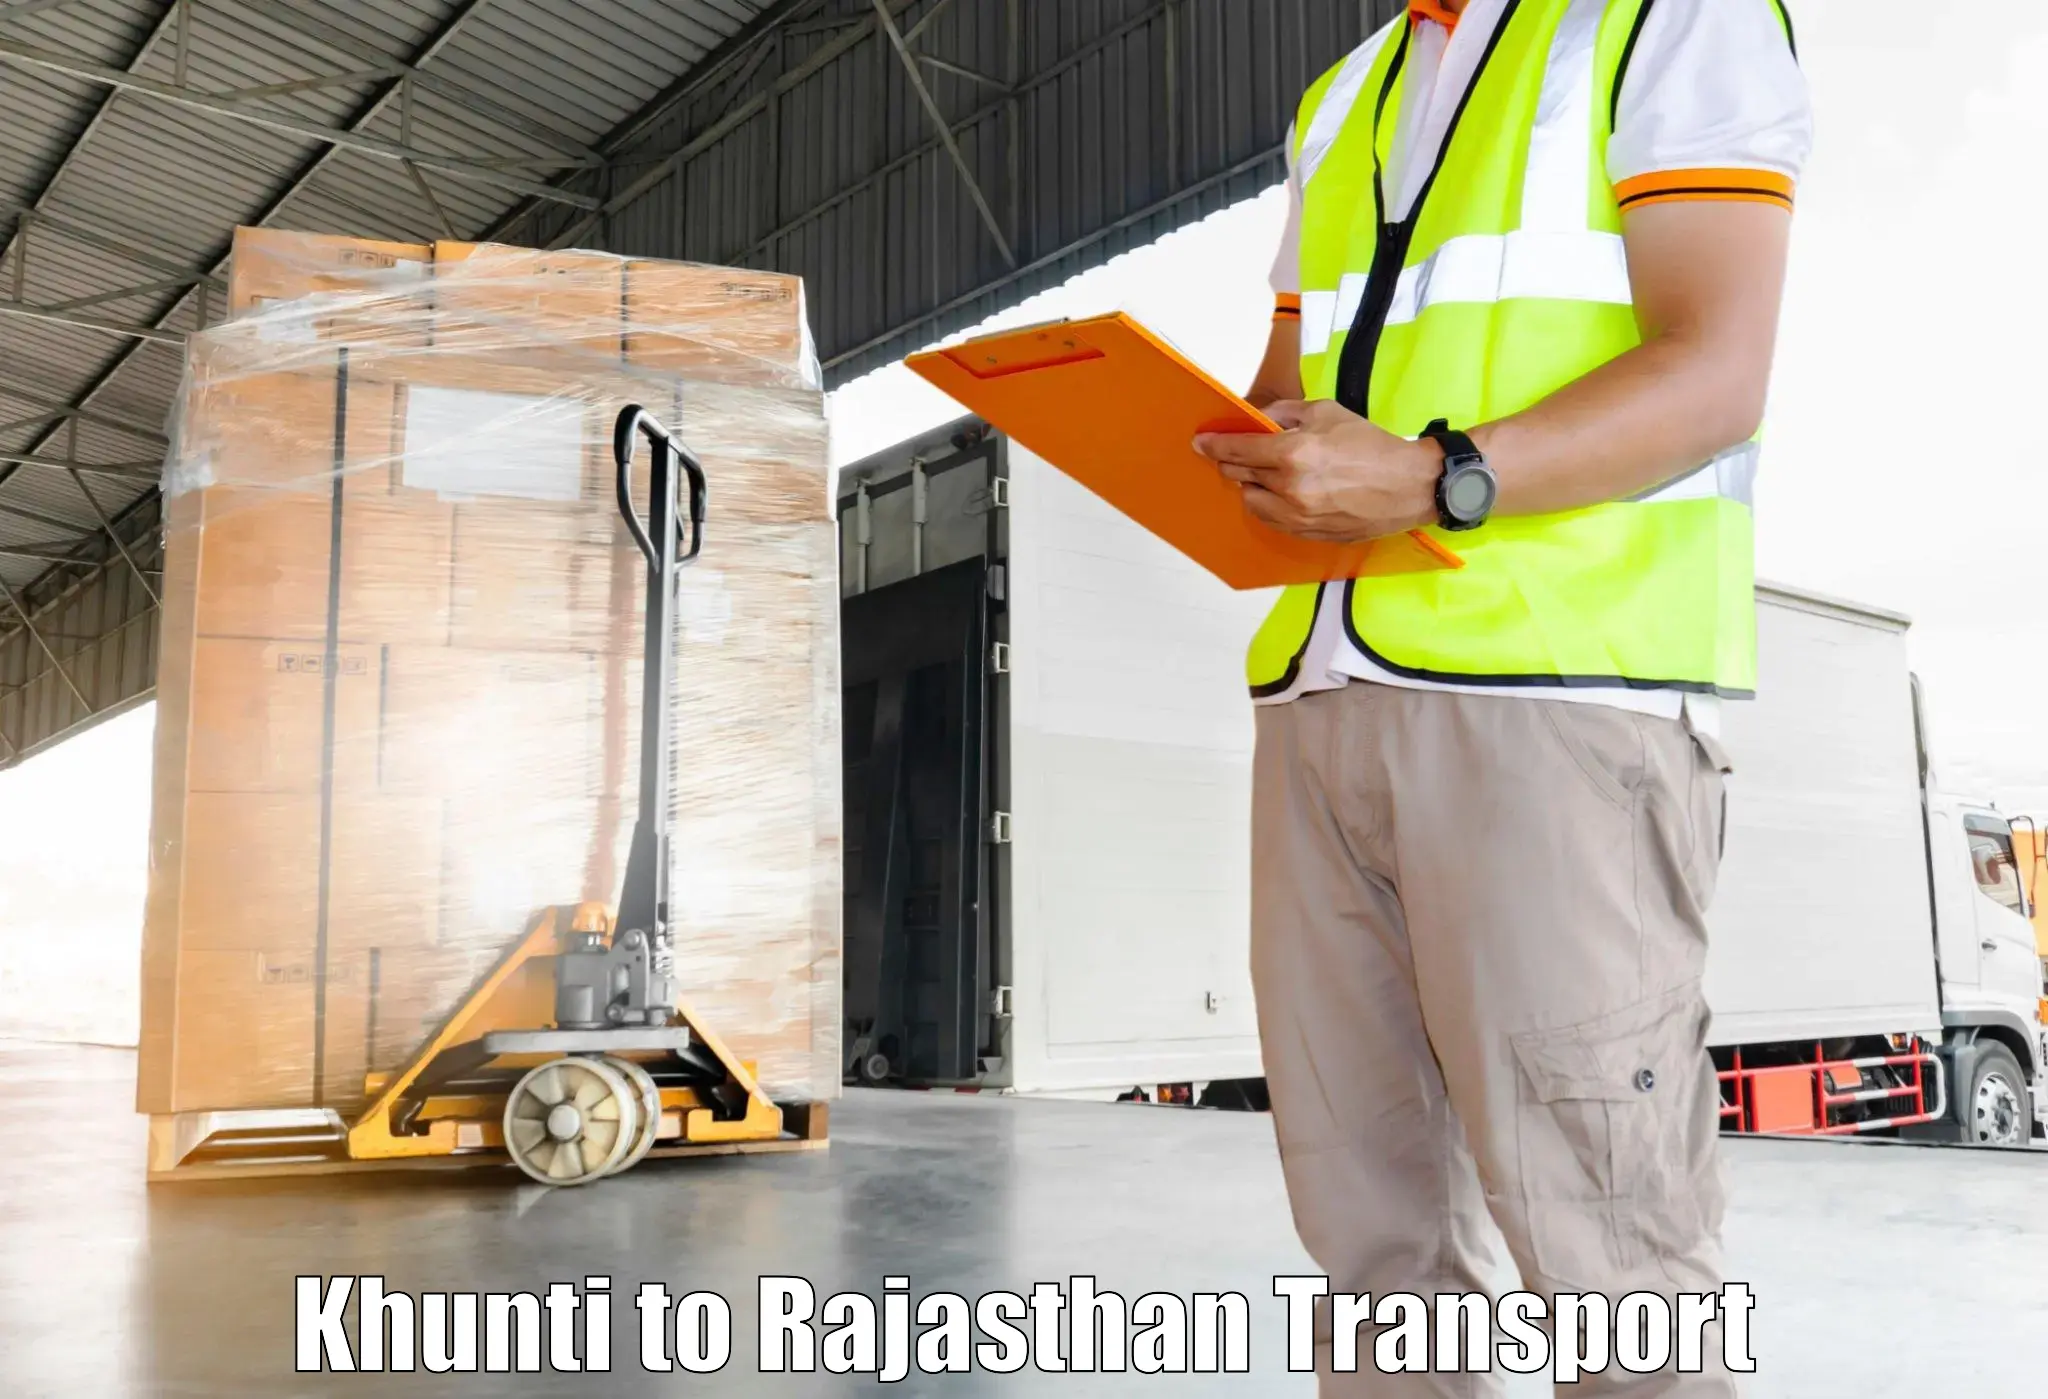 Transport in sharing Khunti to Jhunjhunu